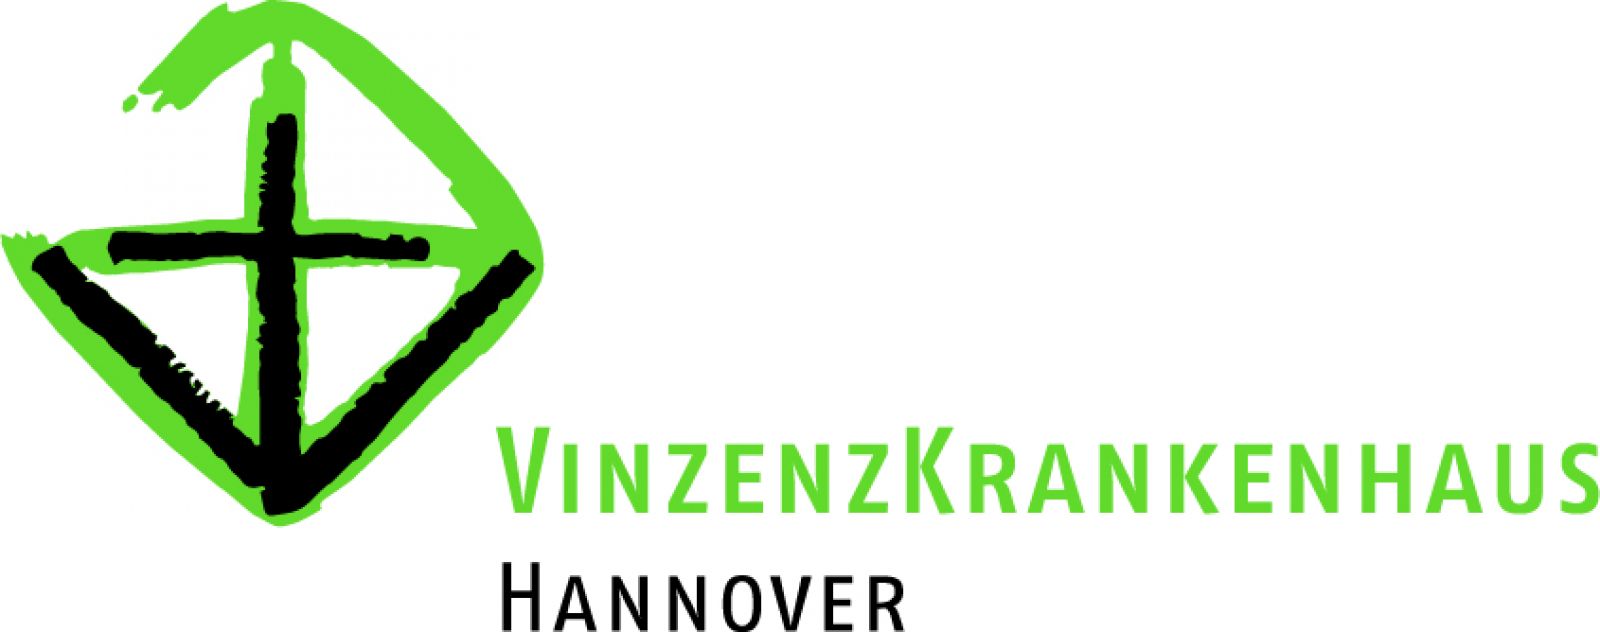 H Vkh Logo Final 4c